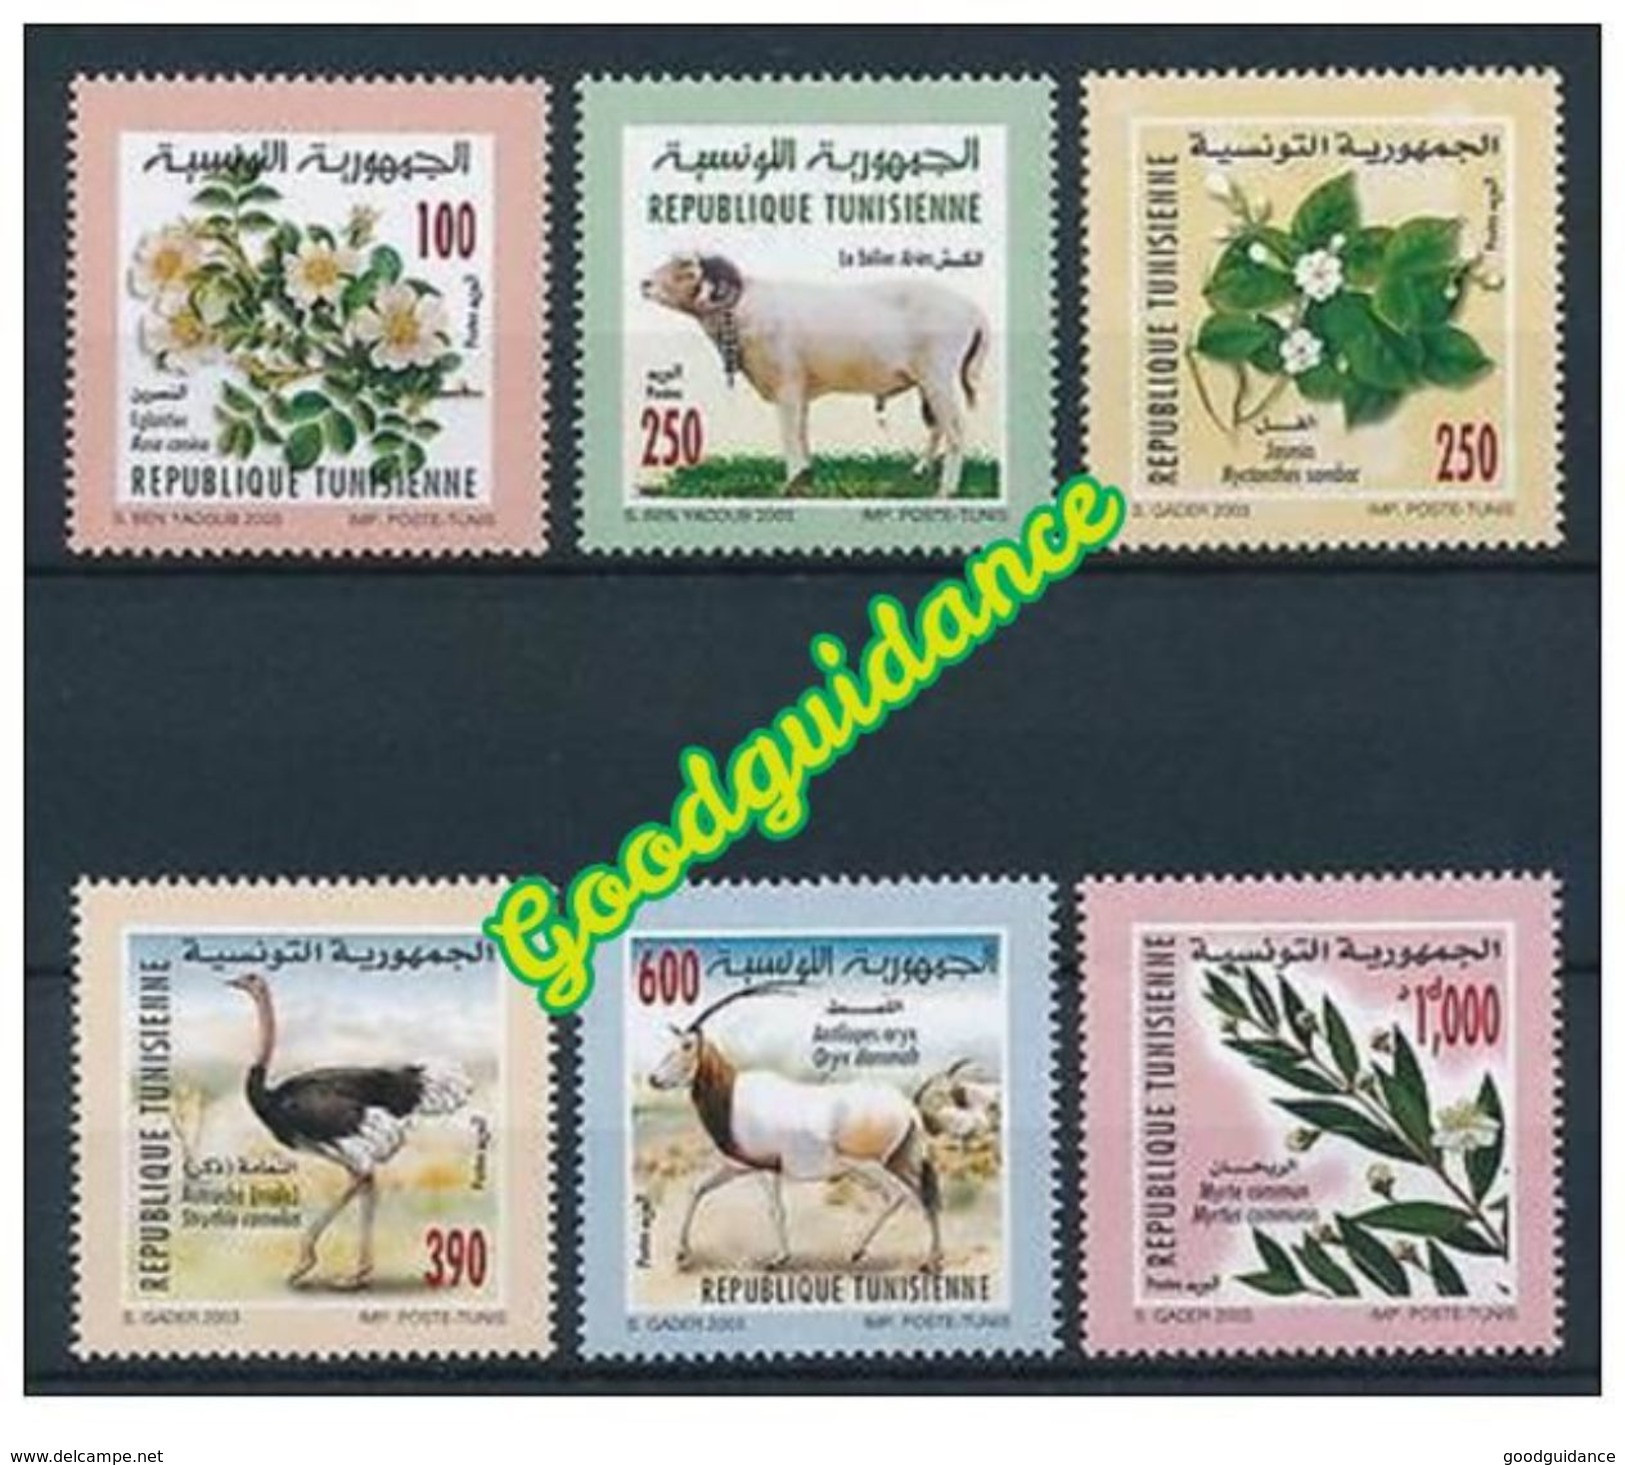 2003- Tunisia- Fauna And Flora: Wild Dog Rose, Jasmine, Ram, Ostrich, Antelope Oryx, Myrtle- Complete Set 3v.MNH** - Tunisia (1956-...)